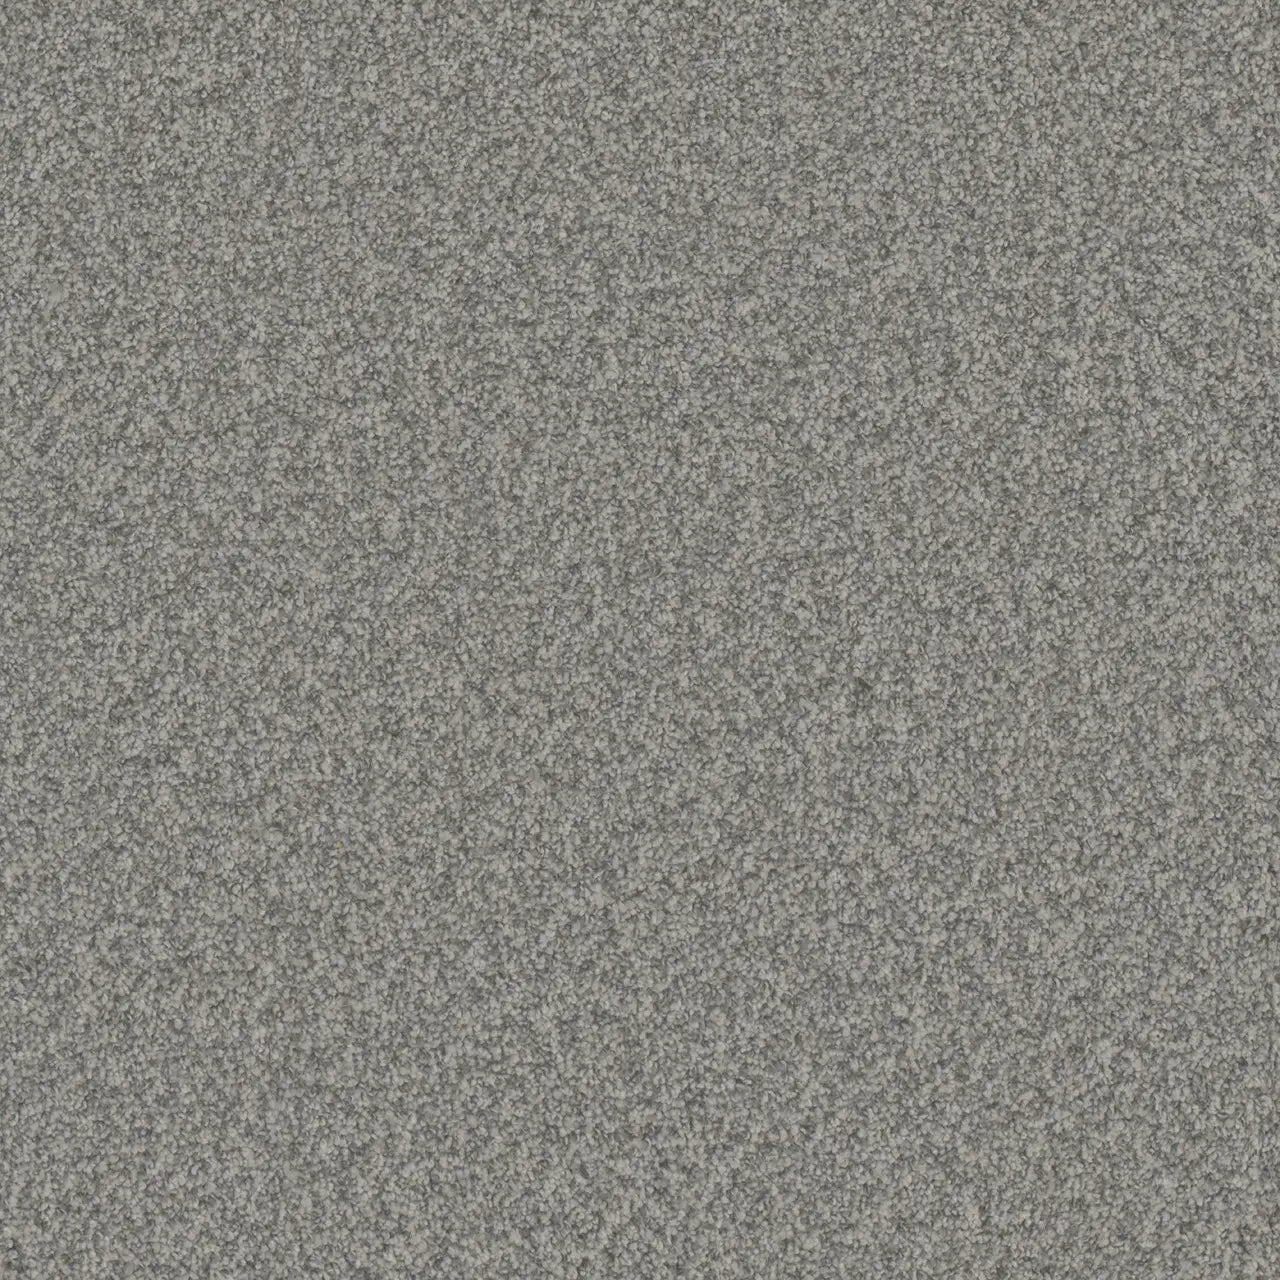 Diamond, Gold Standard I, Carpet by Dreamweaver, Calhoun's Flooring Springfield, IL